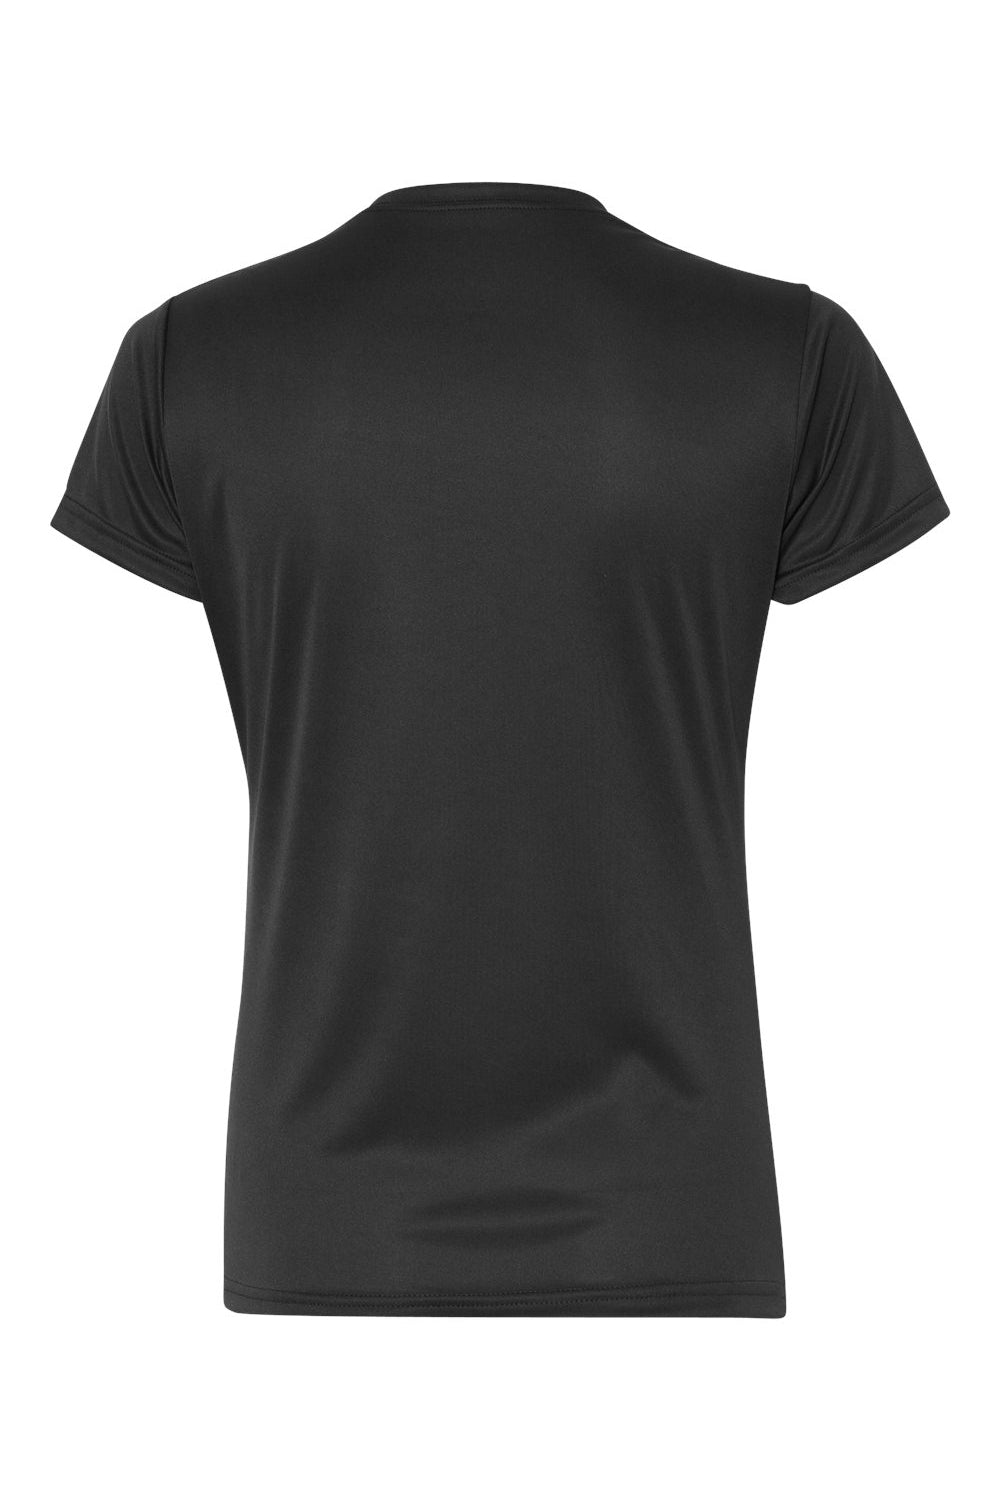 C2 Sport 5600 Womens Performance Moisture Wicking Short Sleeve Crewneck T-Shirt Black Flat Back